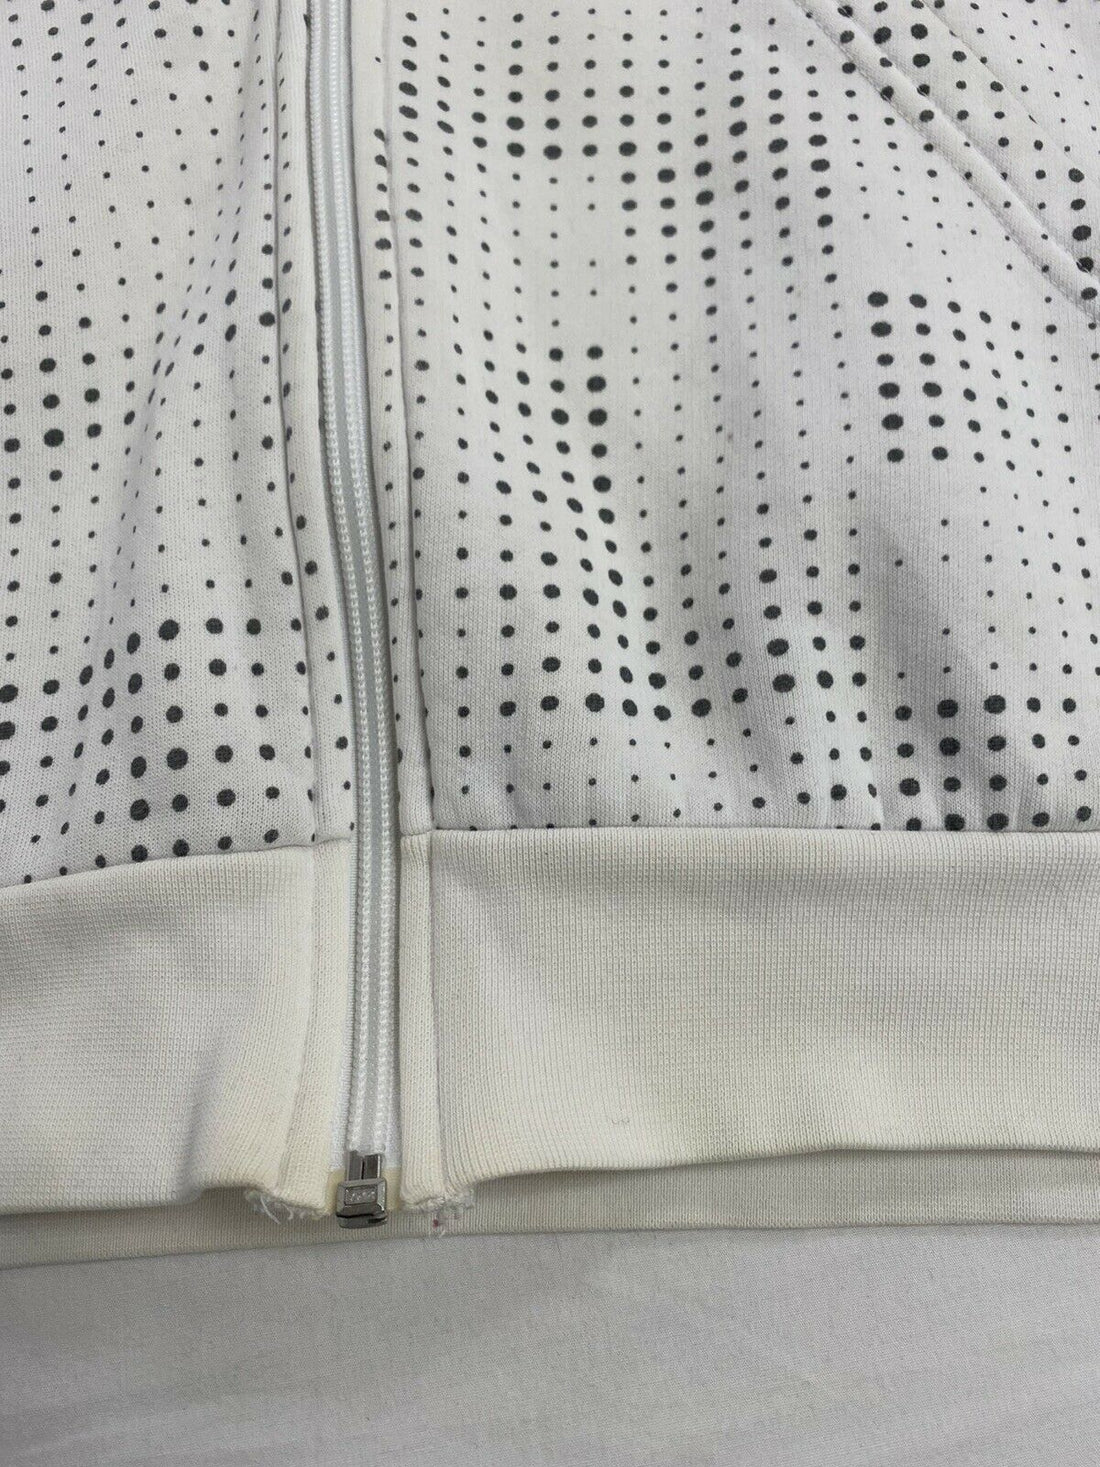 Vintage Nike Sweatshirt Hoodie Size Large White & Gray Full Zip Made Canada